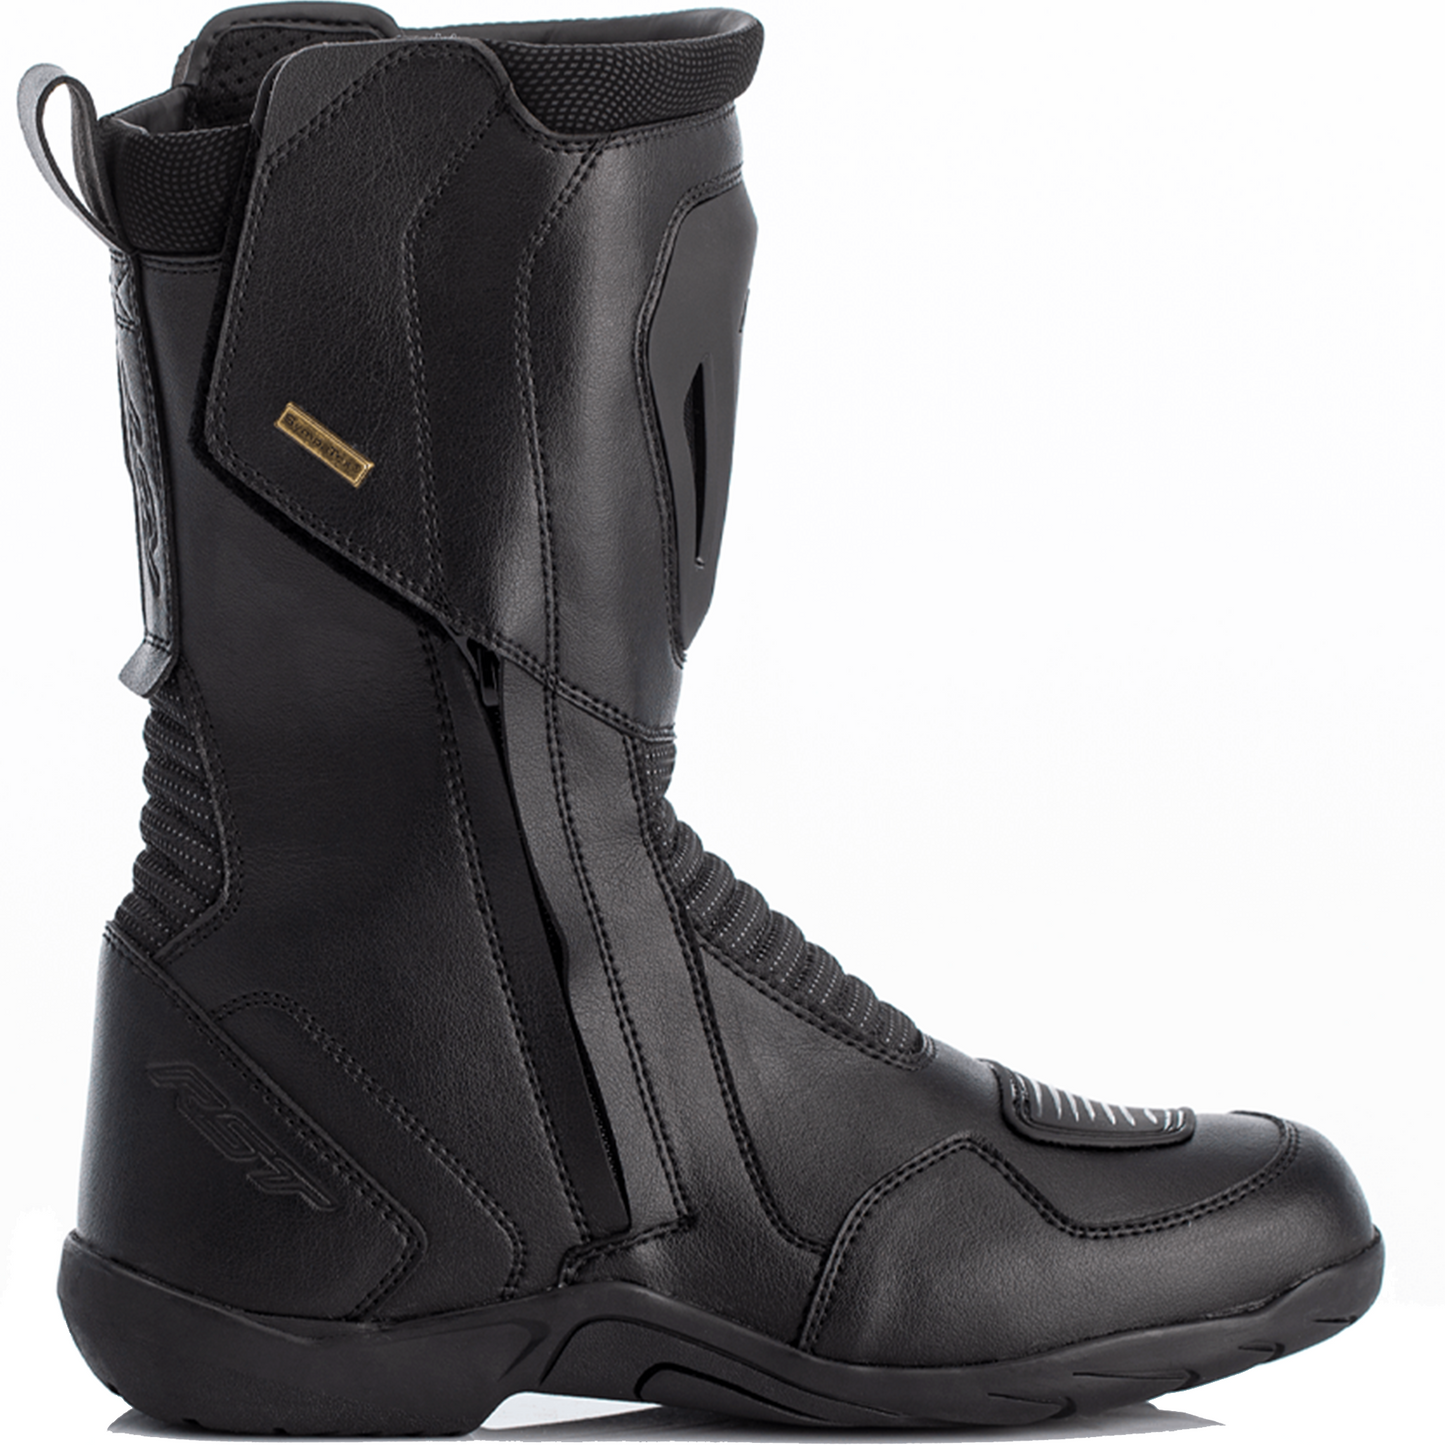 RST Pathfinder (CE) Waterproof Boots (2748) Black